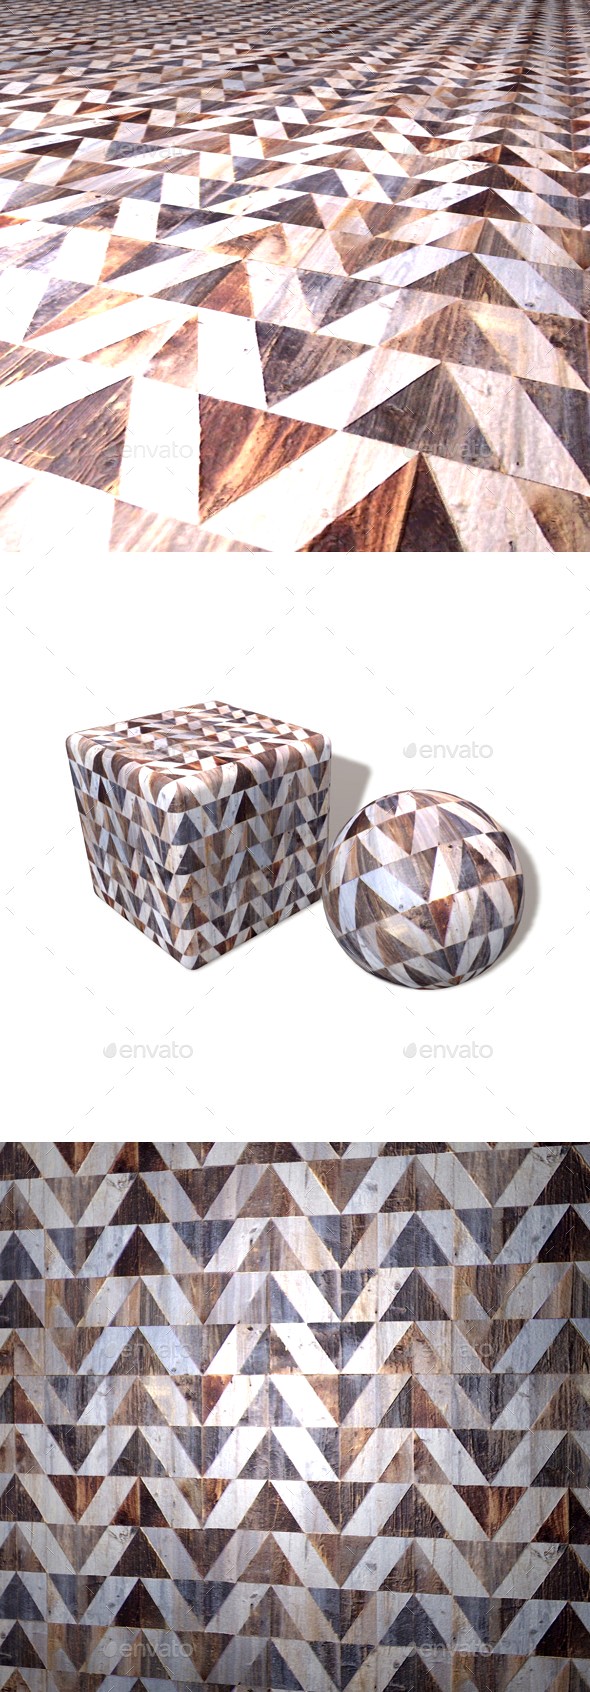 Wooden Pattern Tile Seamless Texture